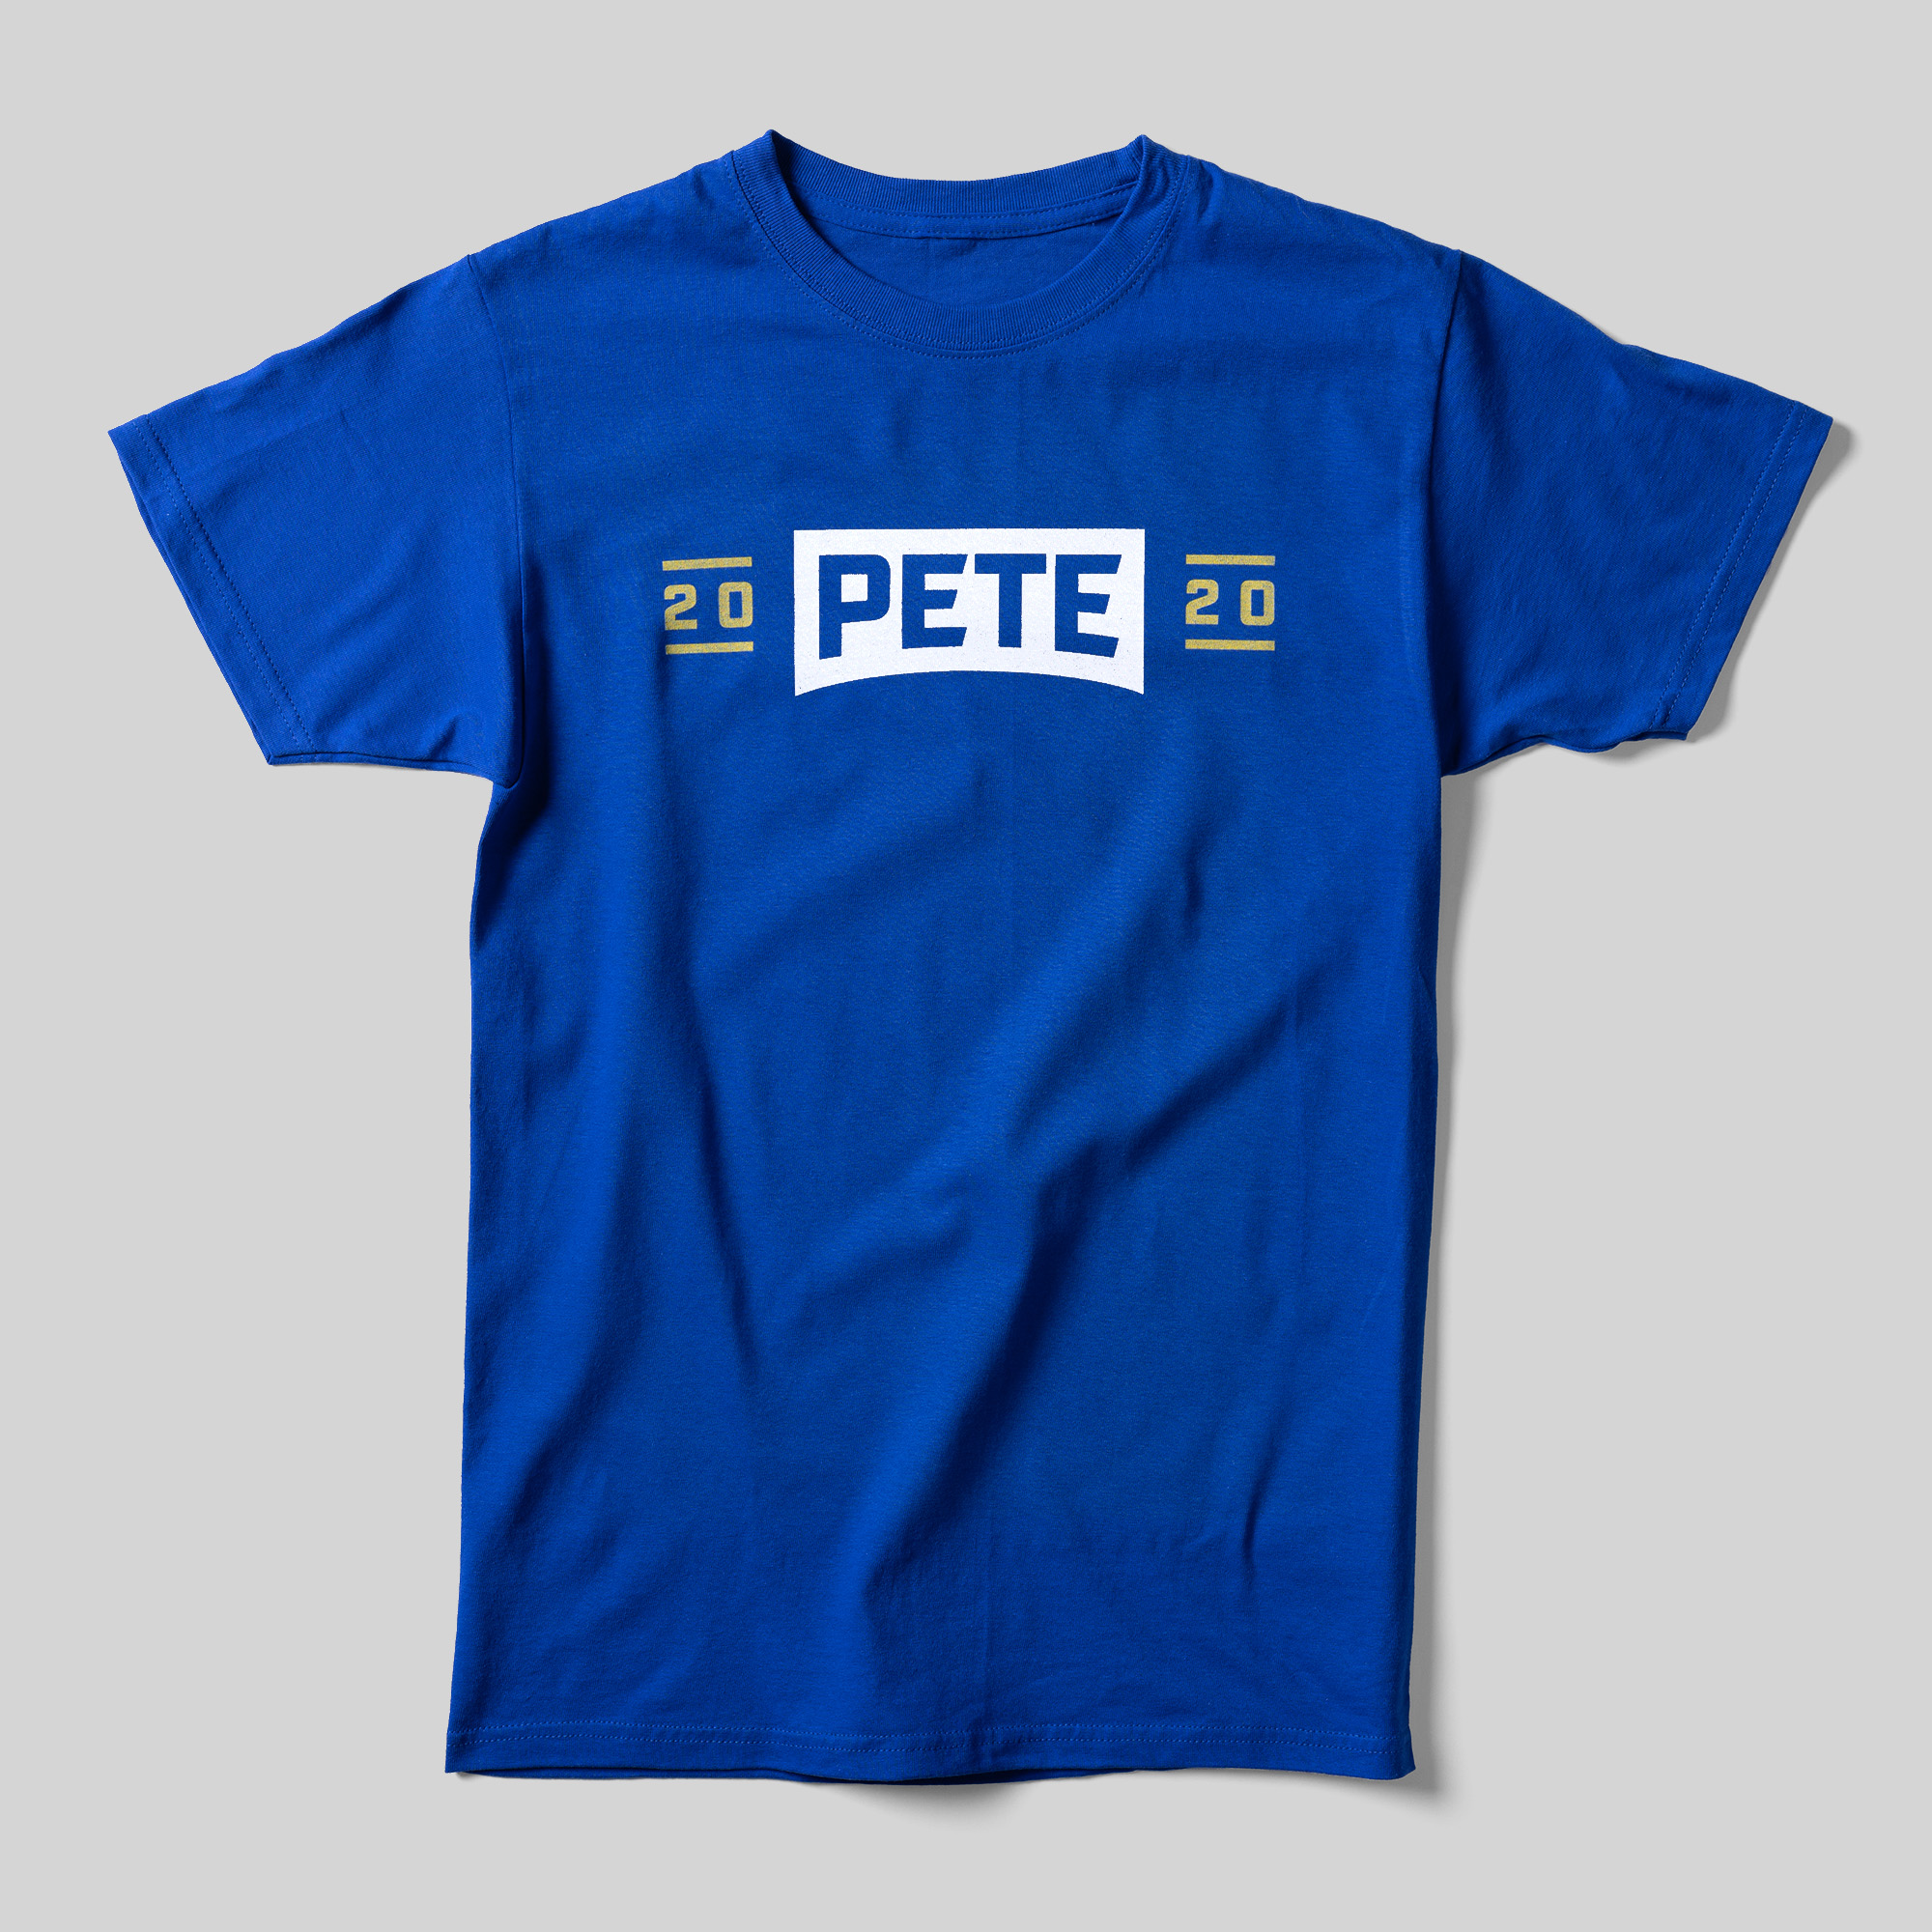 A royal blue t-shirt that reads "20 Pete 20.